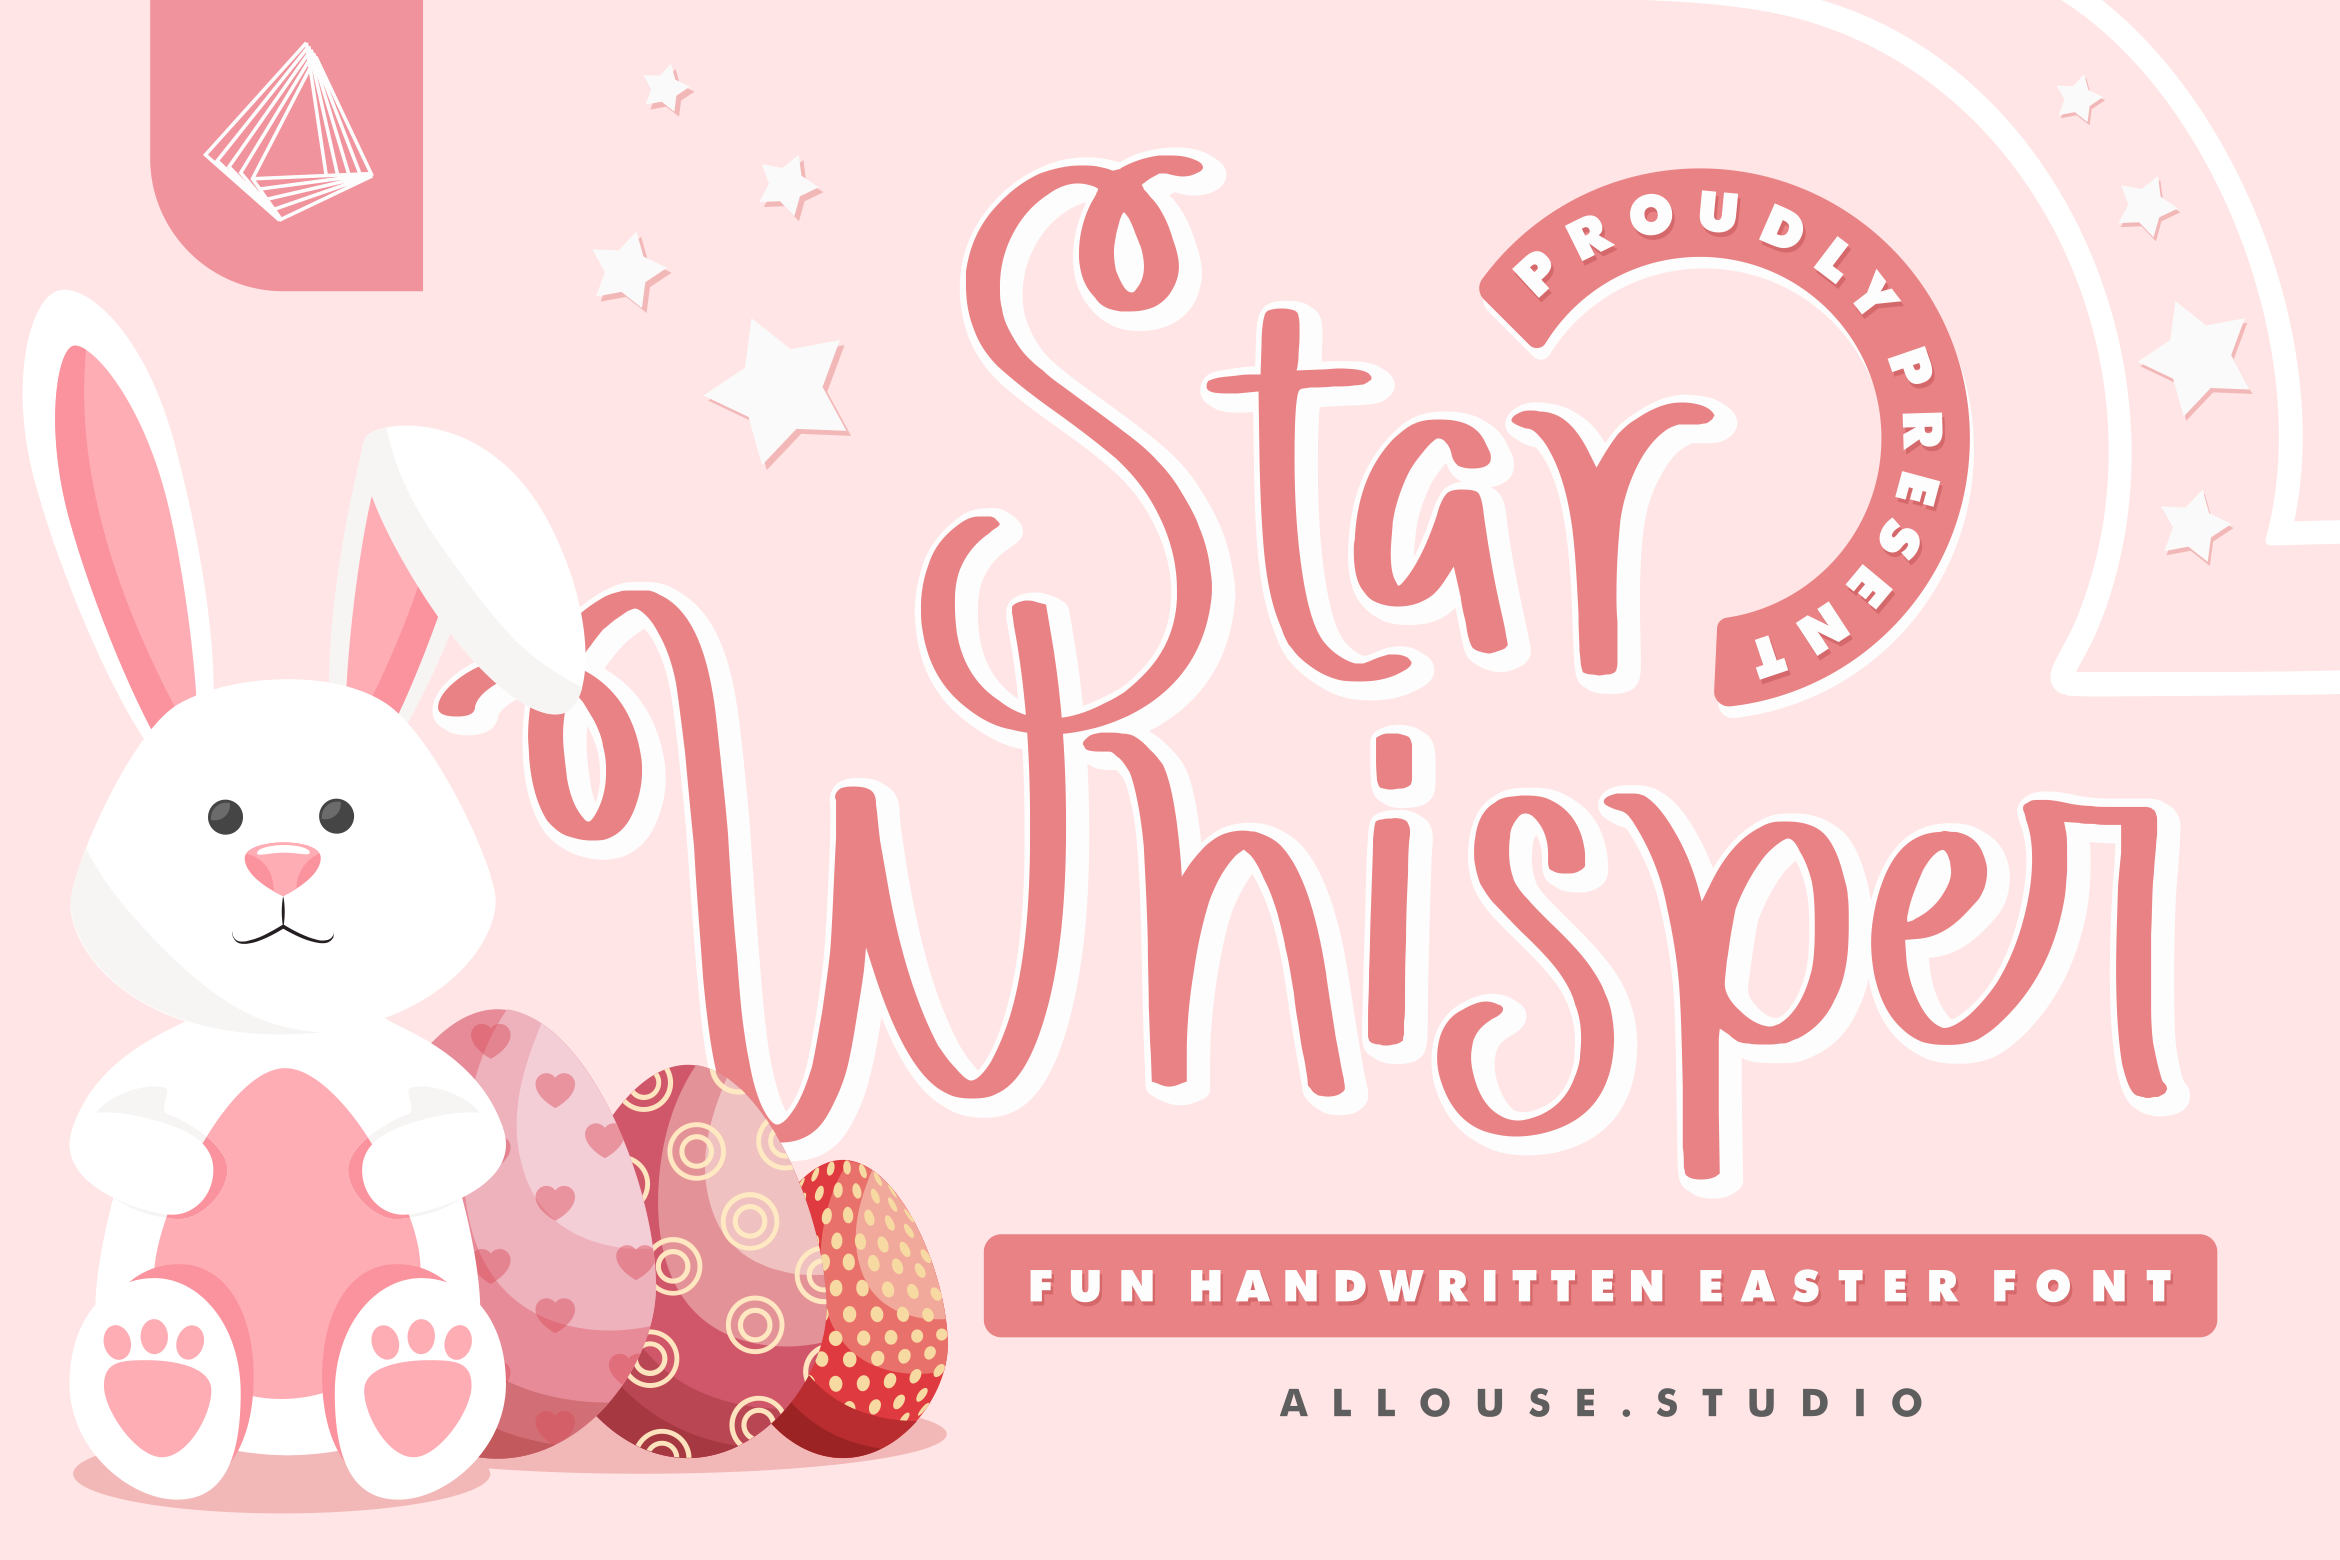 Star Whisper Demo Version